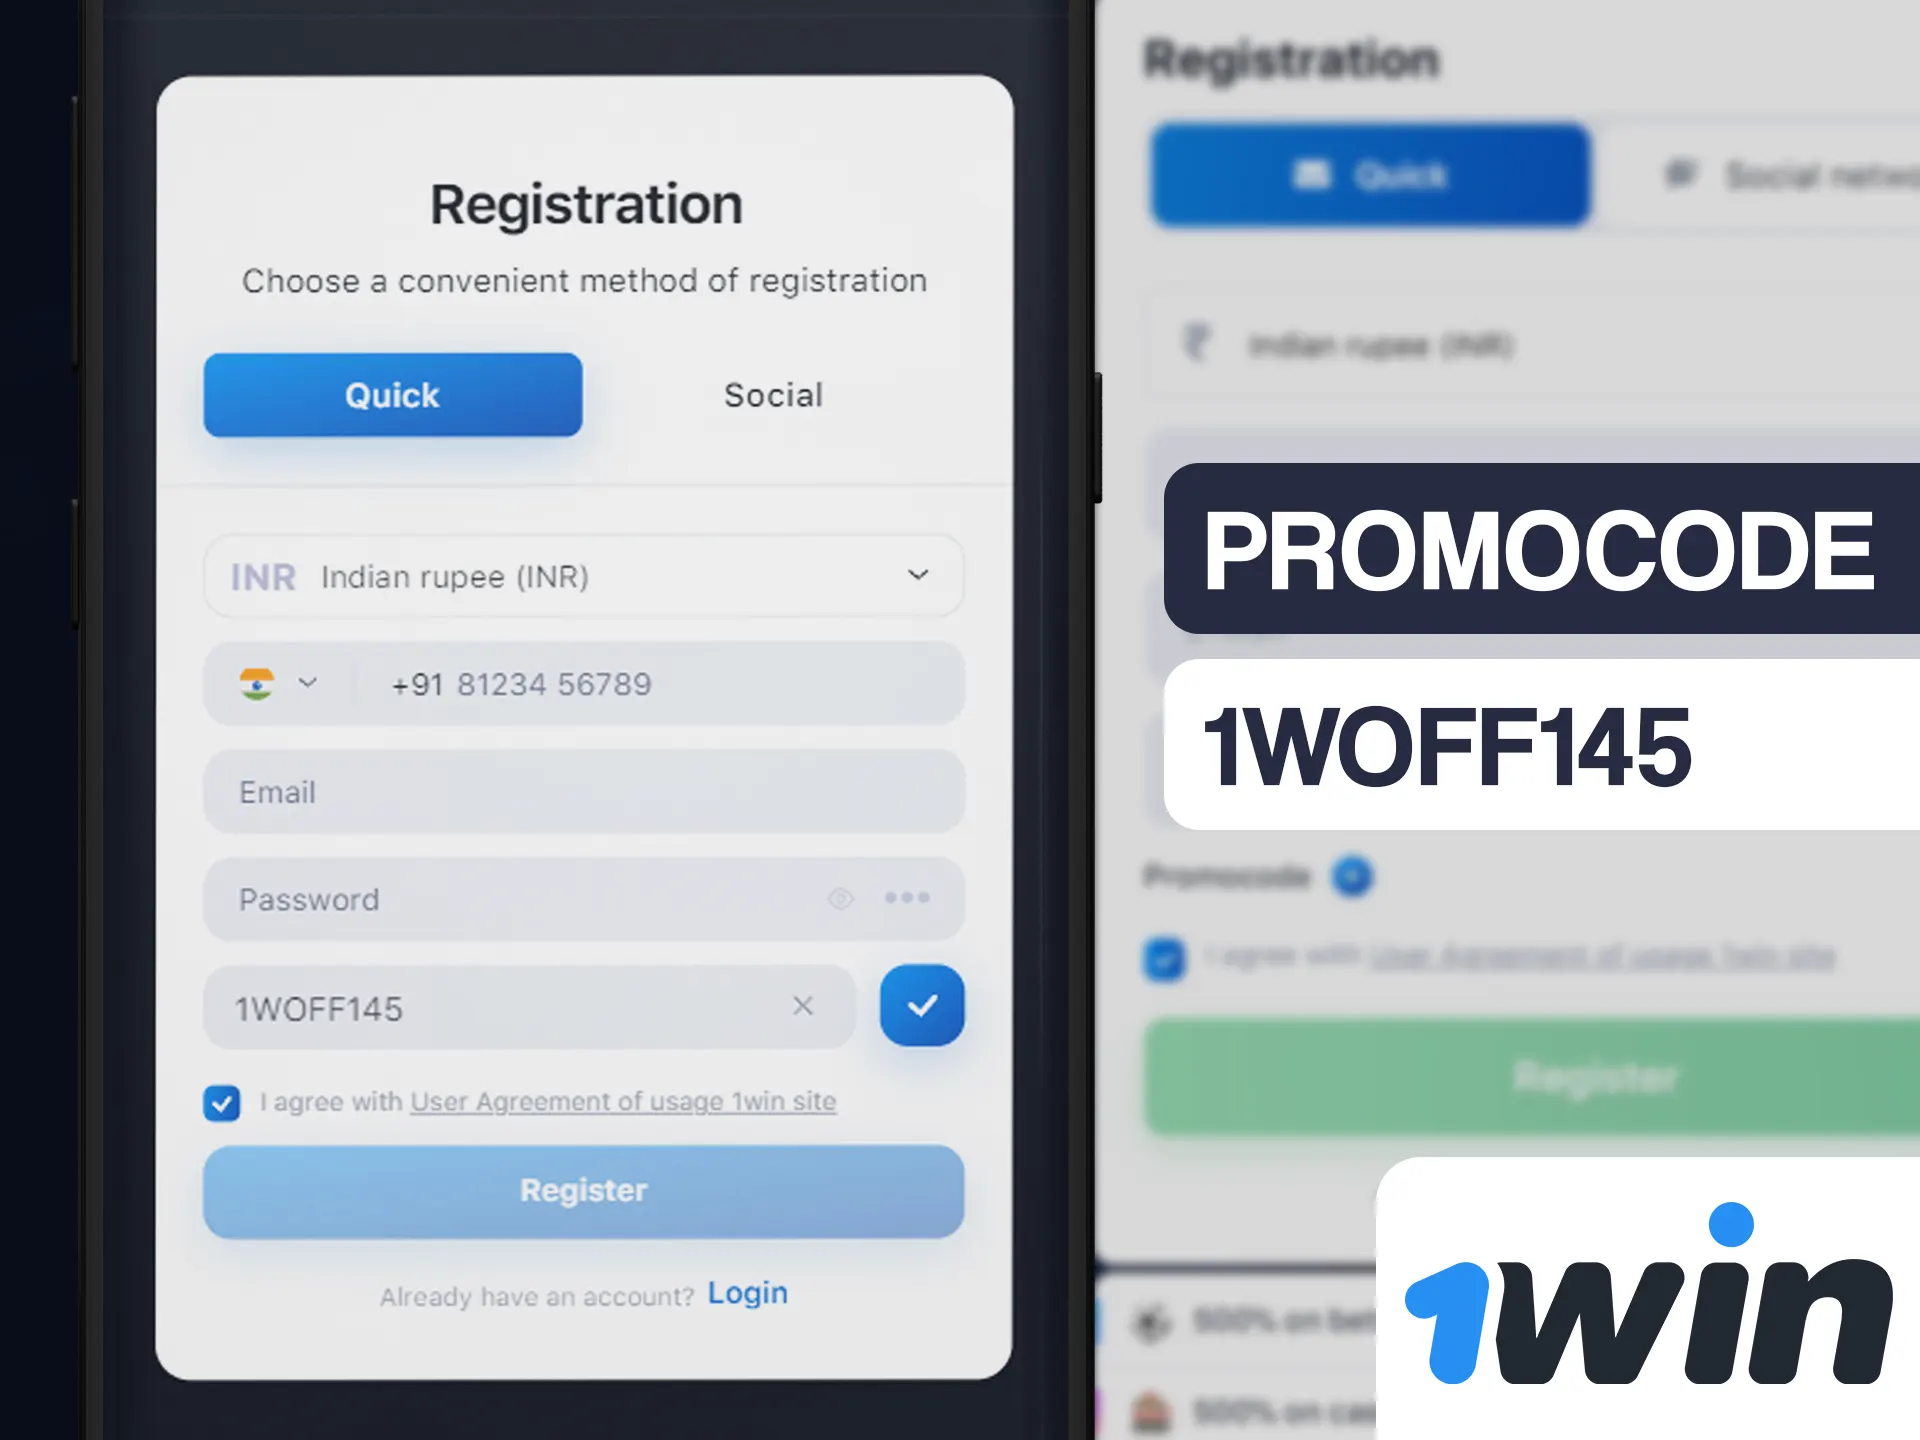 Insert 1win promocode in registration field during registration.